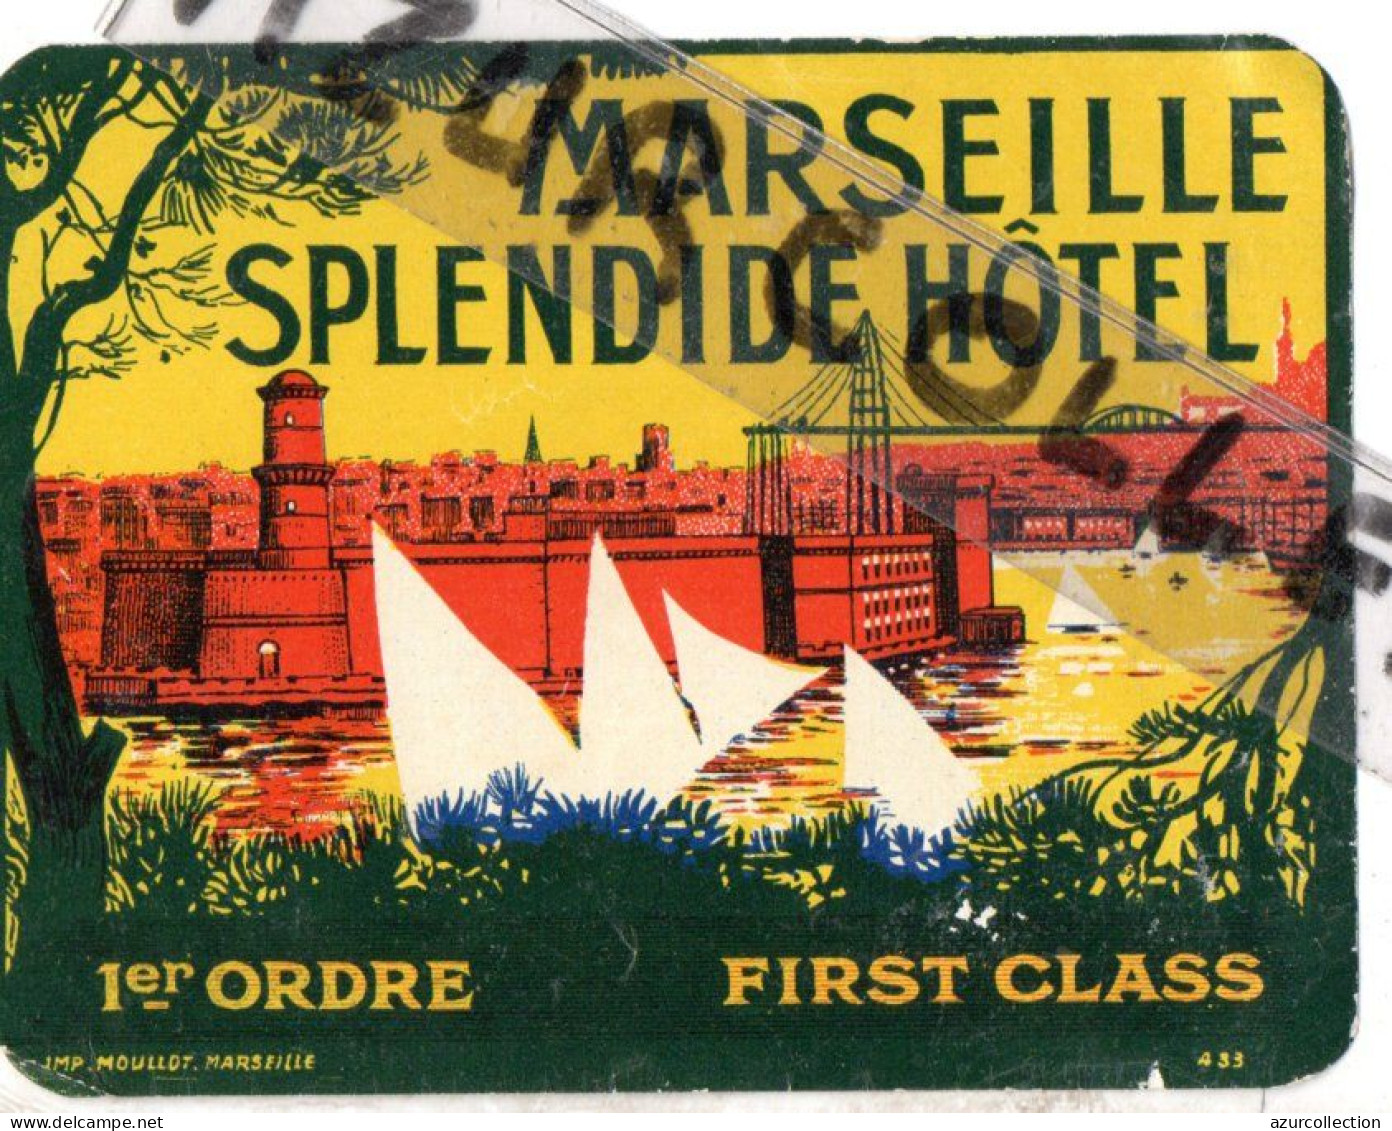 MARSEILLE . SPLENDIDE HOTEL - Hotel Labels